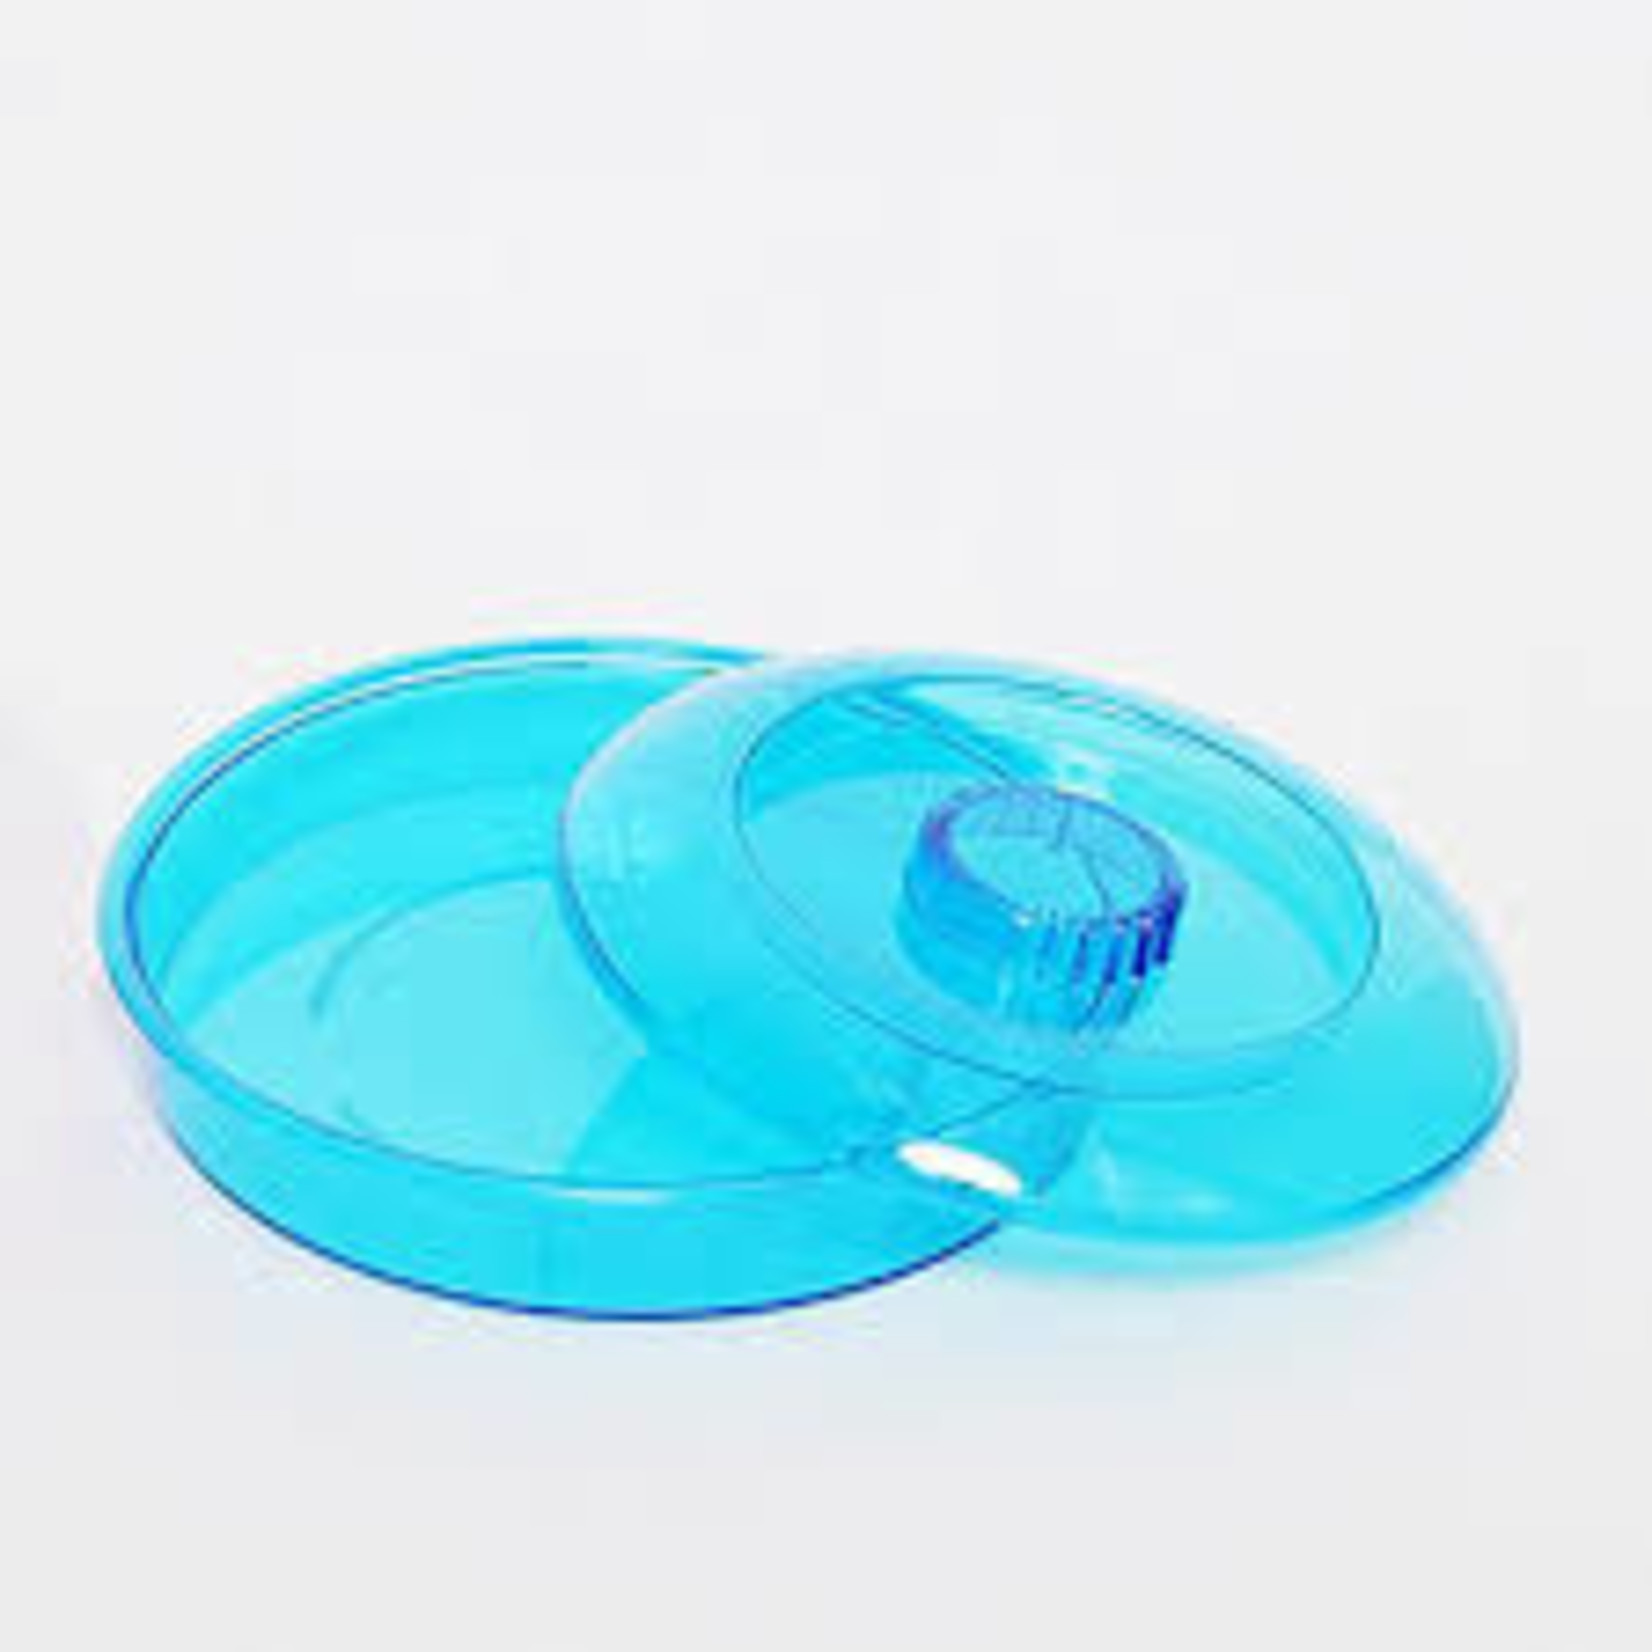 Plastic Tortilla Warmer - Turquoise